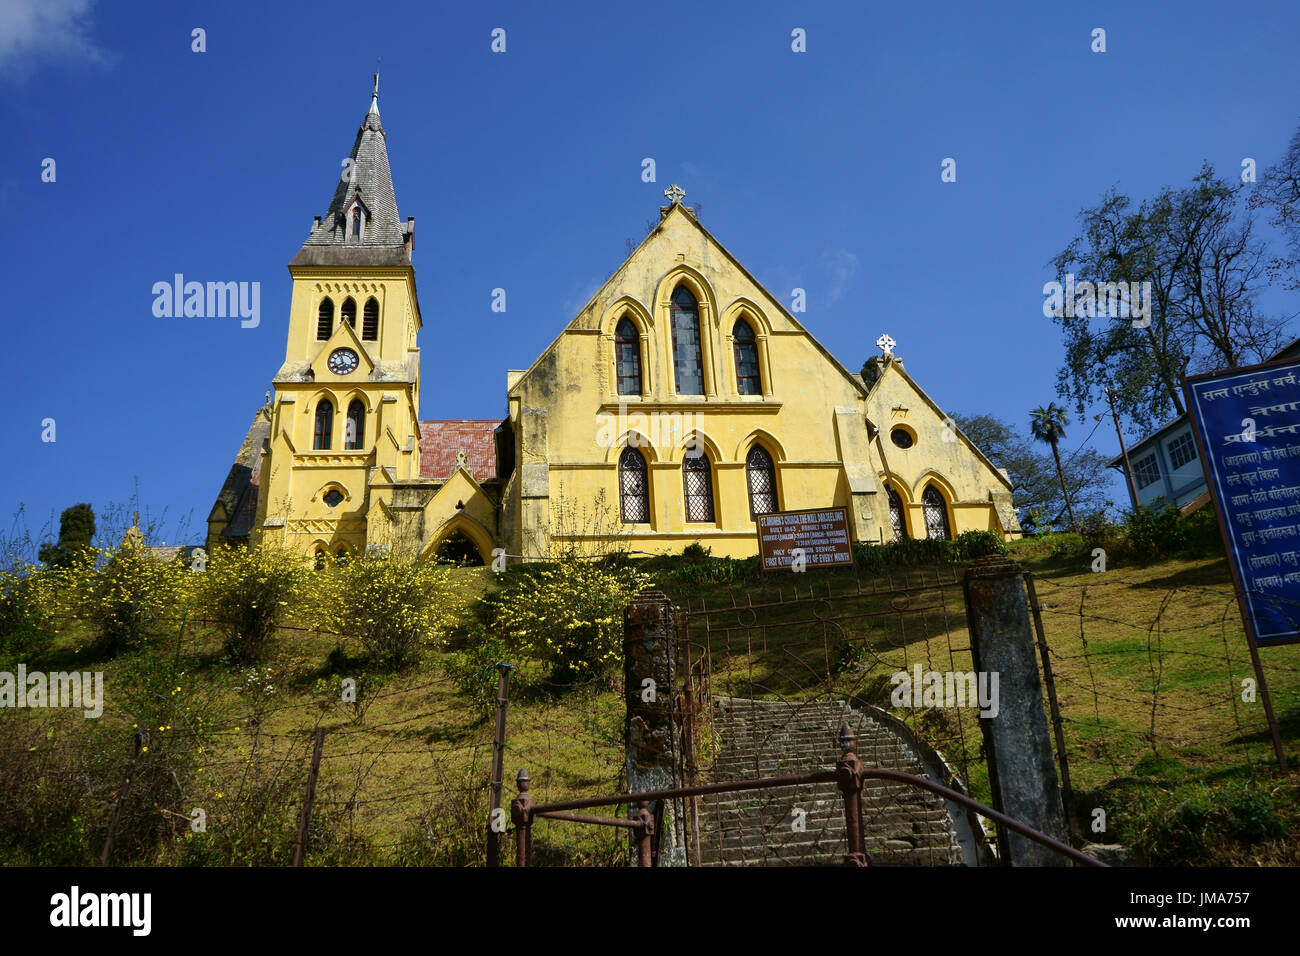 Saint Andrew's church, Darjeeling, West Bengal, India Stock Photo